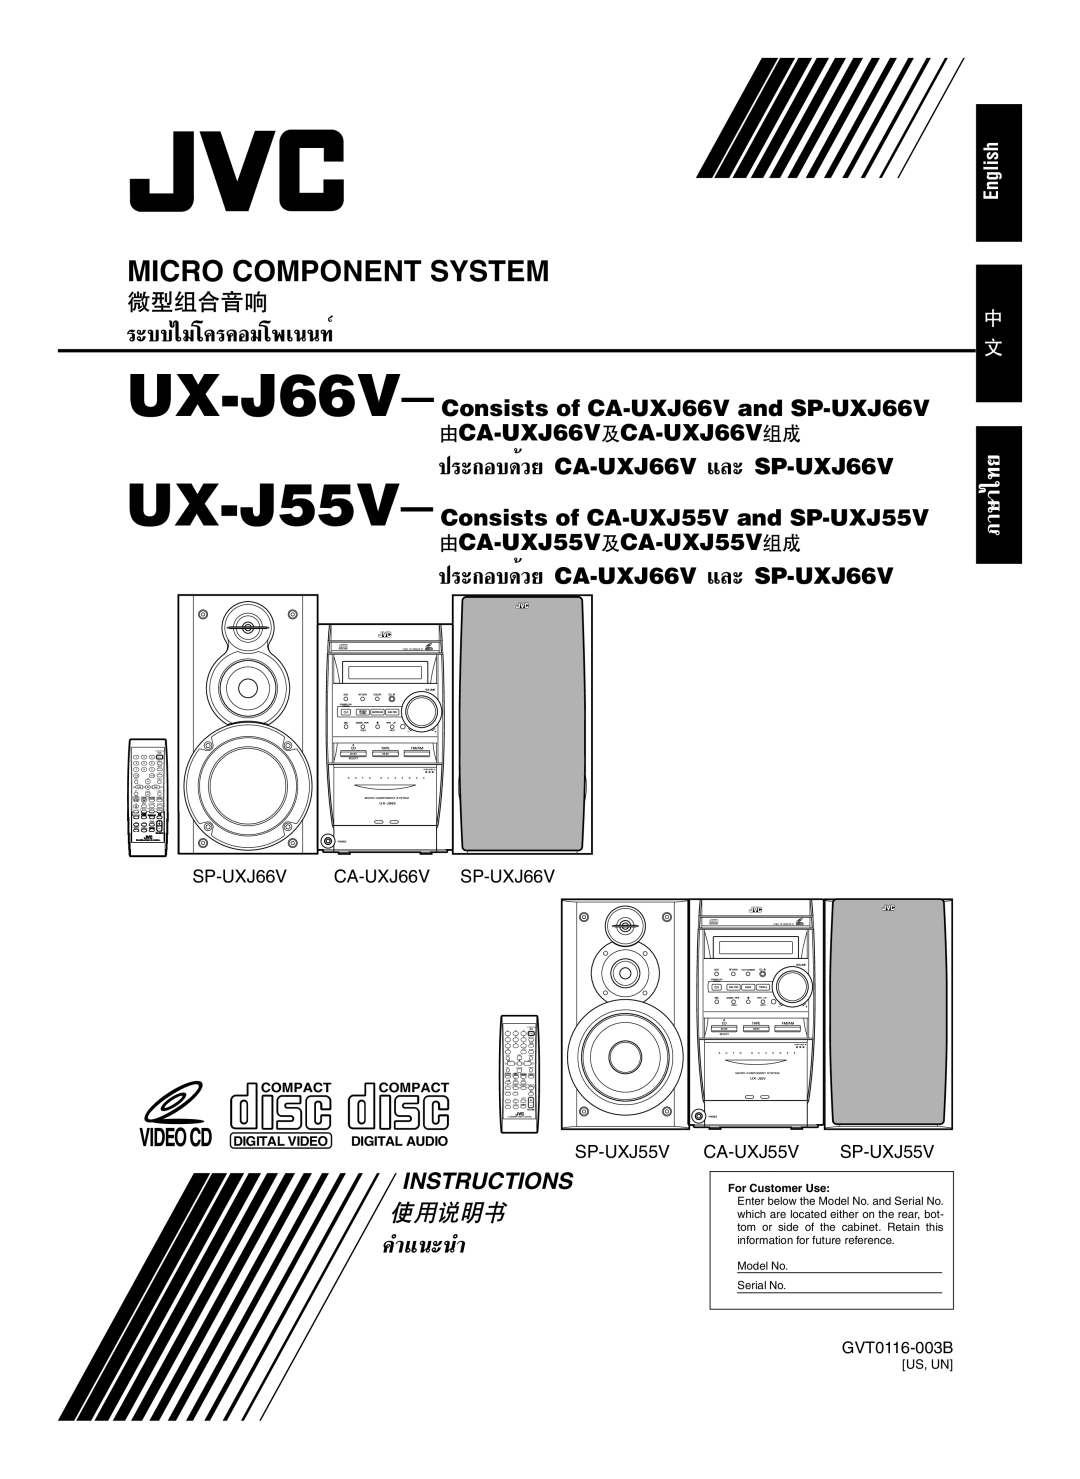 JVC UX-J55V manual √- ‰¡‚§√§Õ¡‚æ‡ππ∑Ï, ª√-Õ ¥È«¬ CA-UXJ66V ·≈- SP-UXJ66V, English, SP-UXJ55V, Micro Component System 